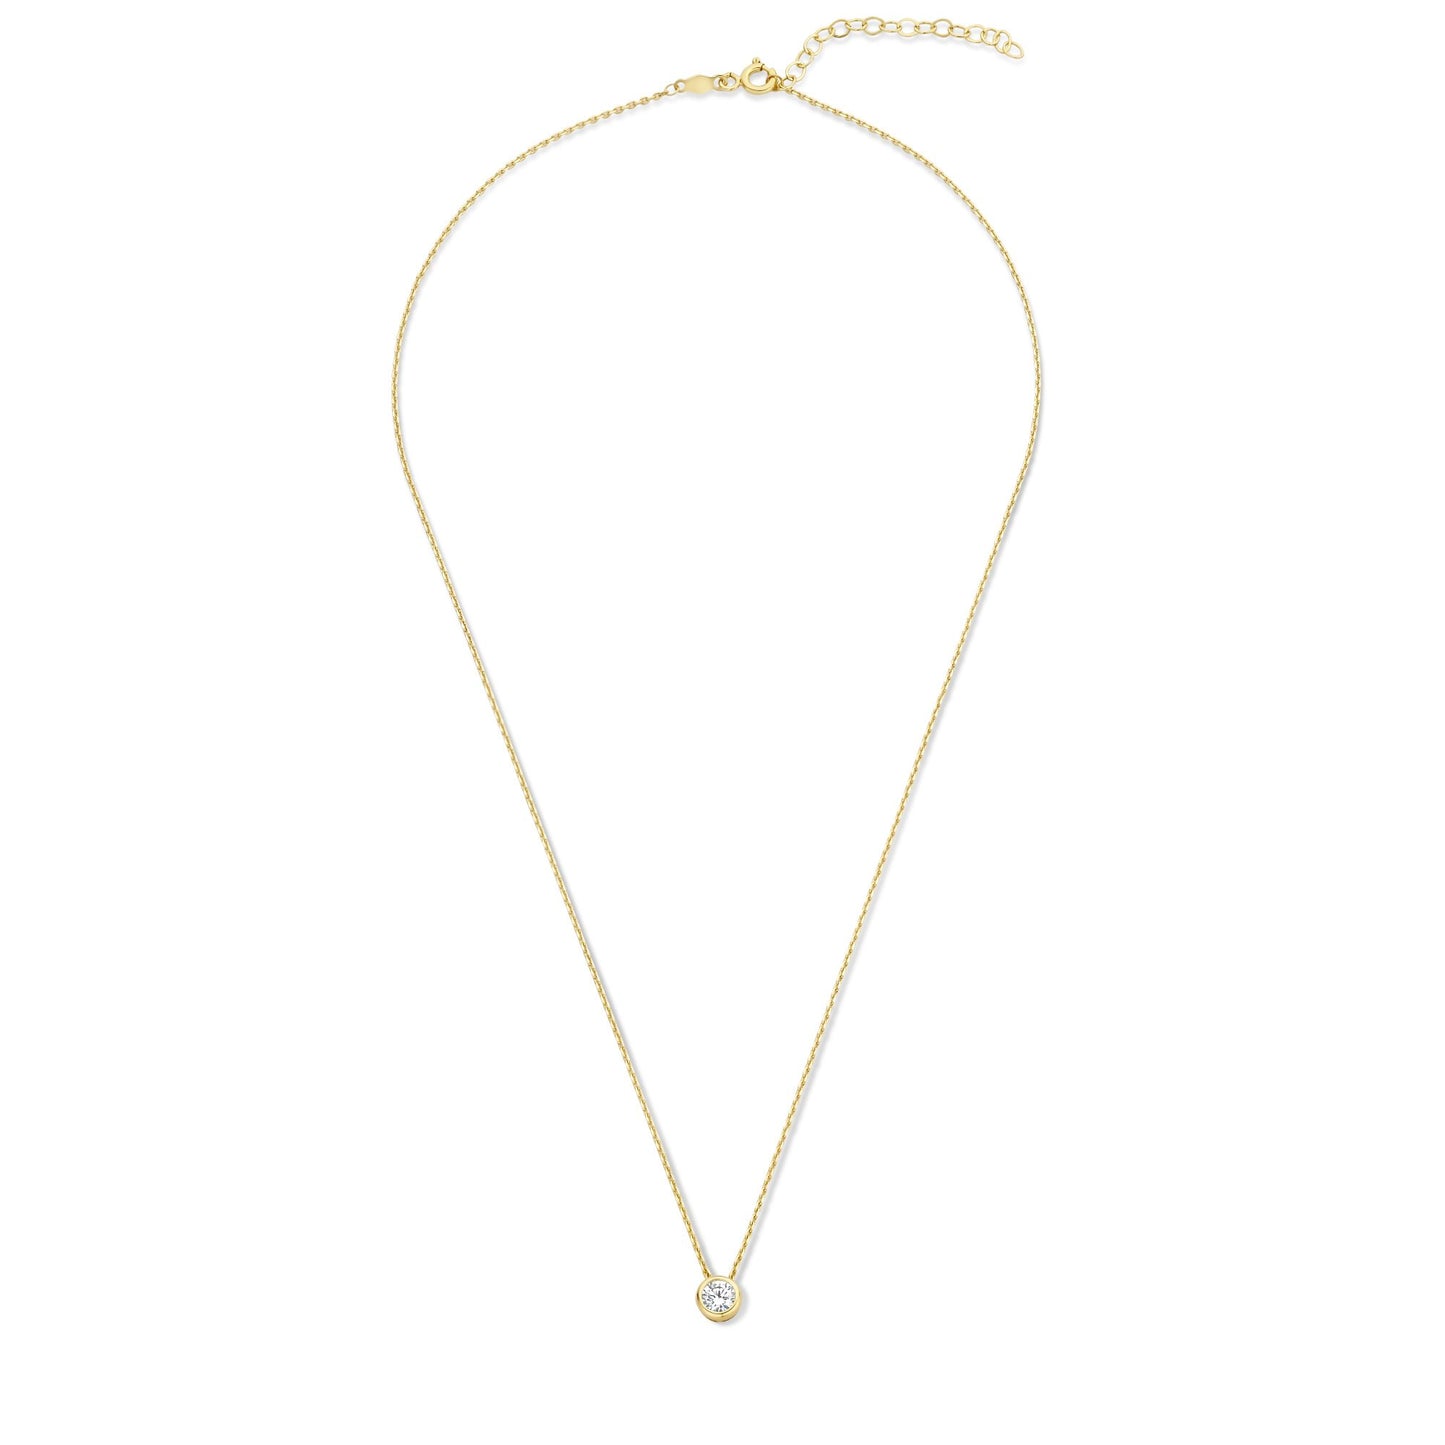 Monte Napoleone Lucilla 9 karat gold necklace with zirconia